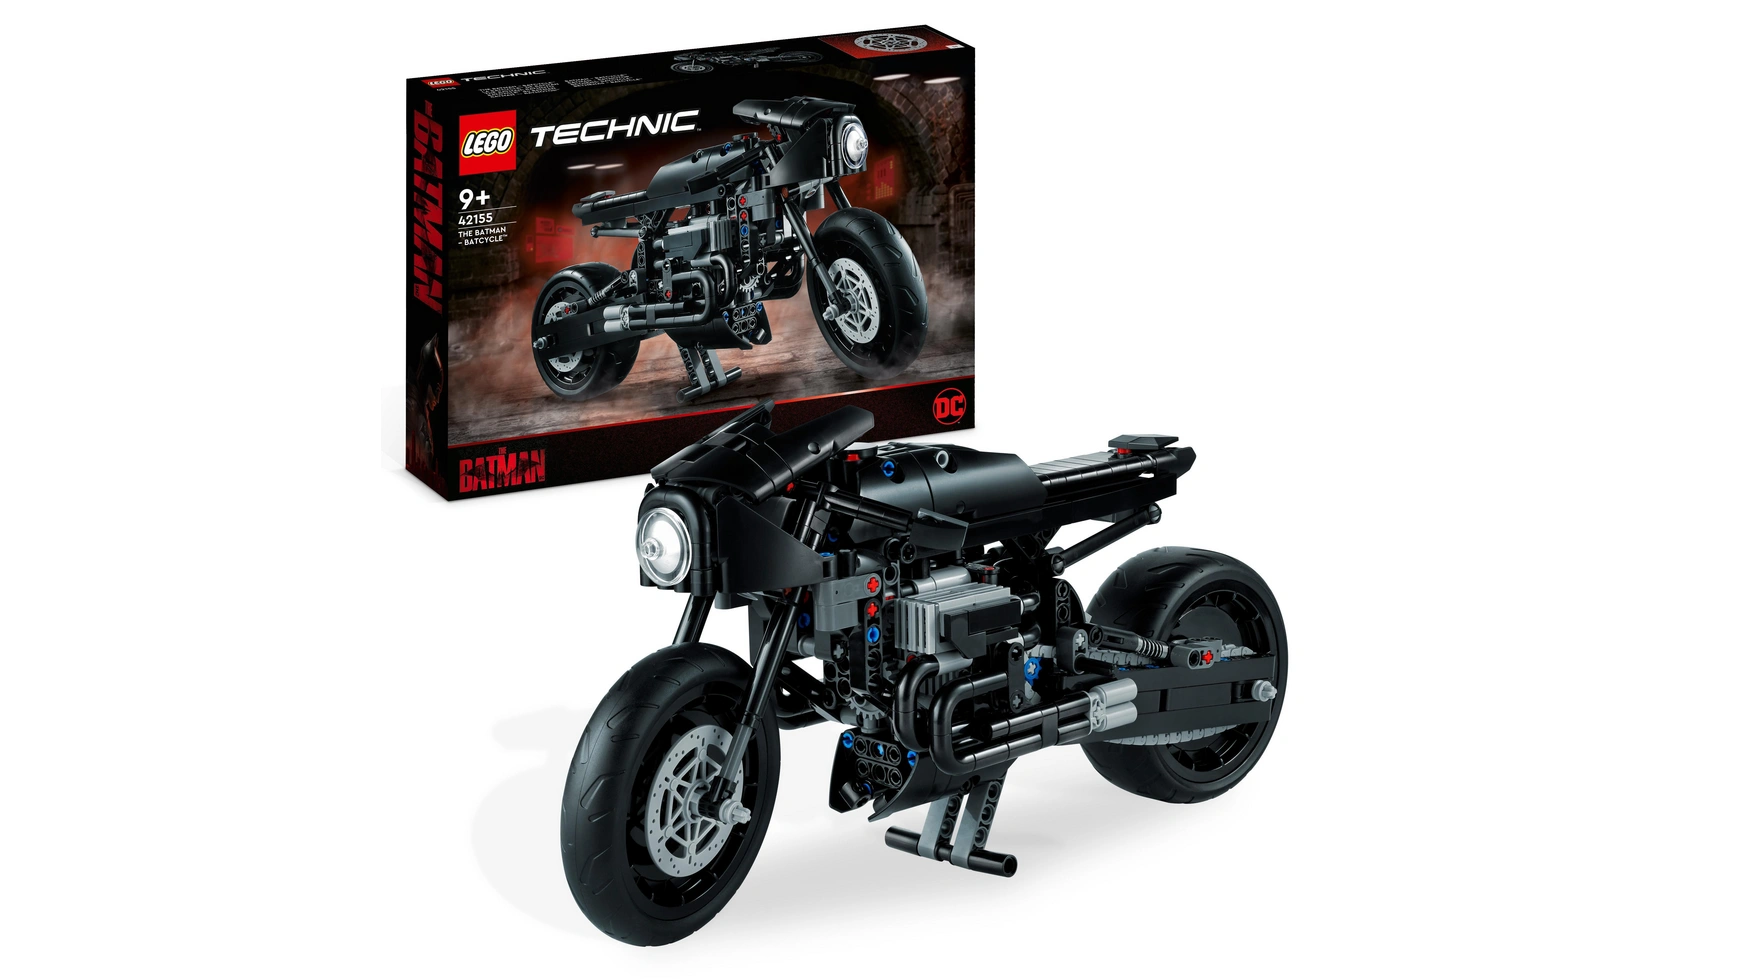 Lego Technic БЭТМЕН Набор БАТЦИКЛ, модель мотоцикла lego technic bmw m 1000 rr модель мотоцикла для взрослых